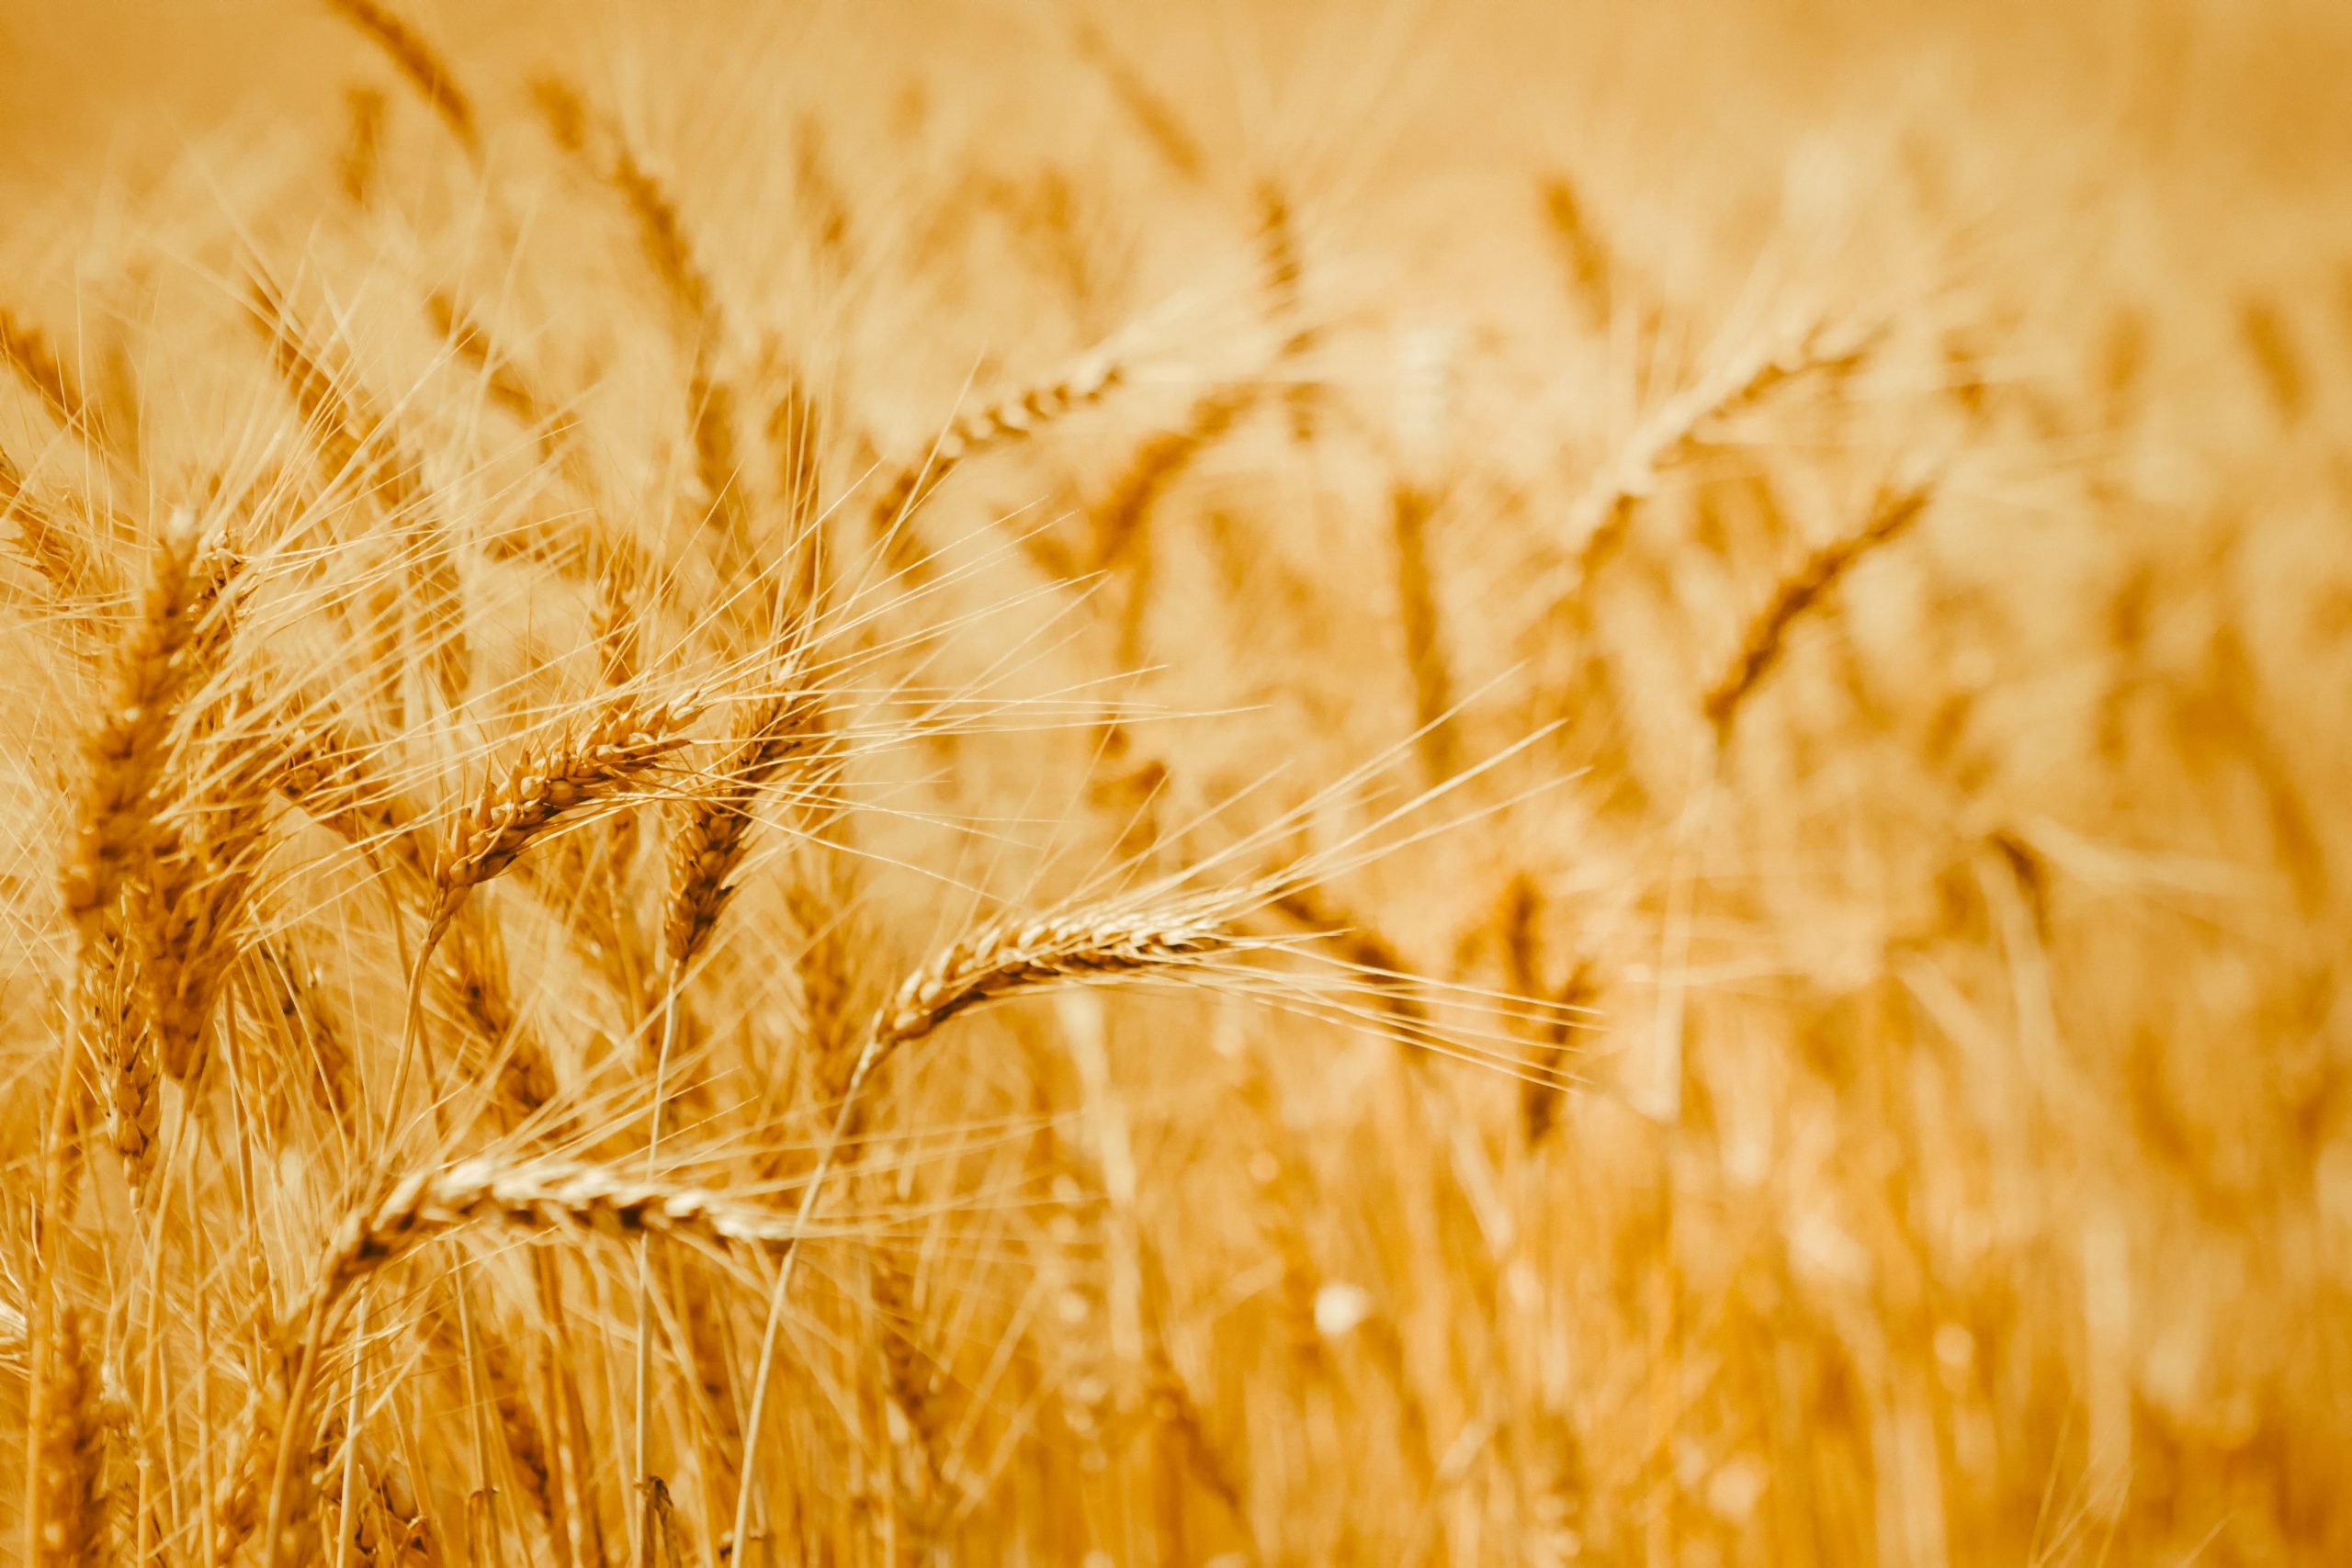 Ripe wheat ears in a field. Wheat field.Ears of golden wheat close up. Background of ripening ears of meadow wheat field. Rich harvest Concept.